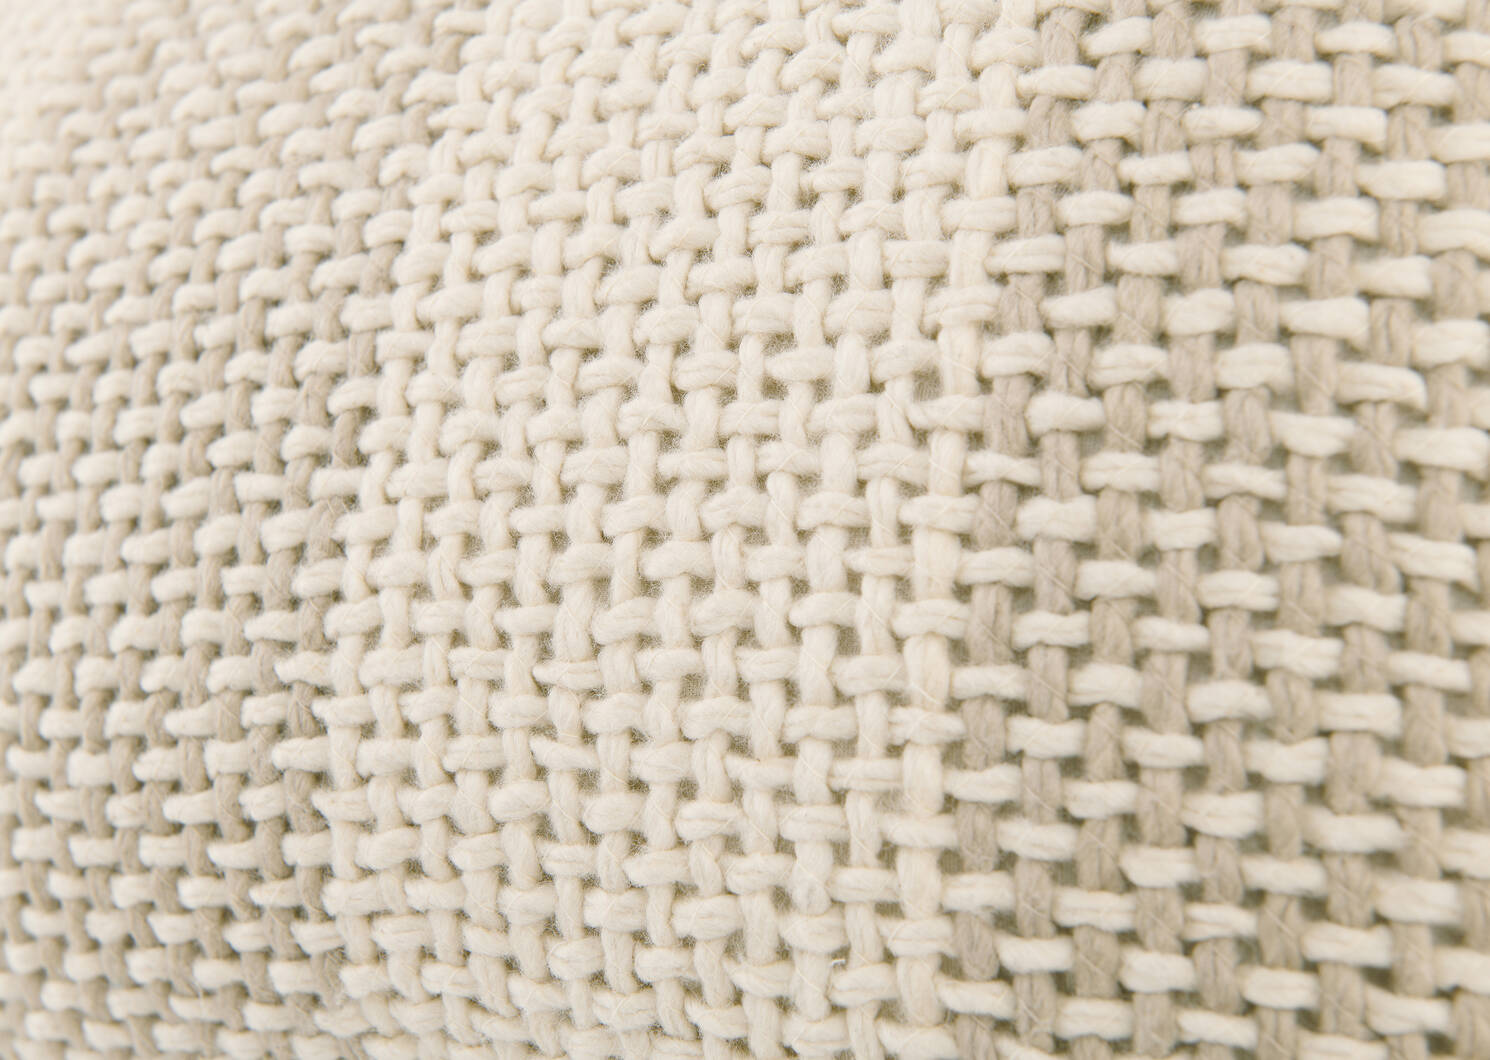 Masen Cotton Pillow 12x22 Sand/Ivory